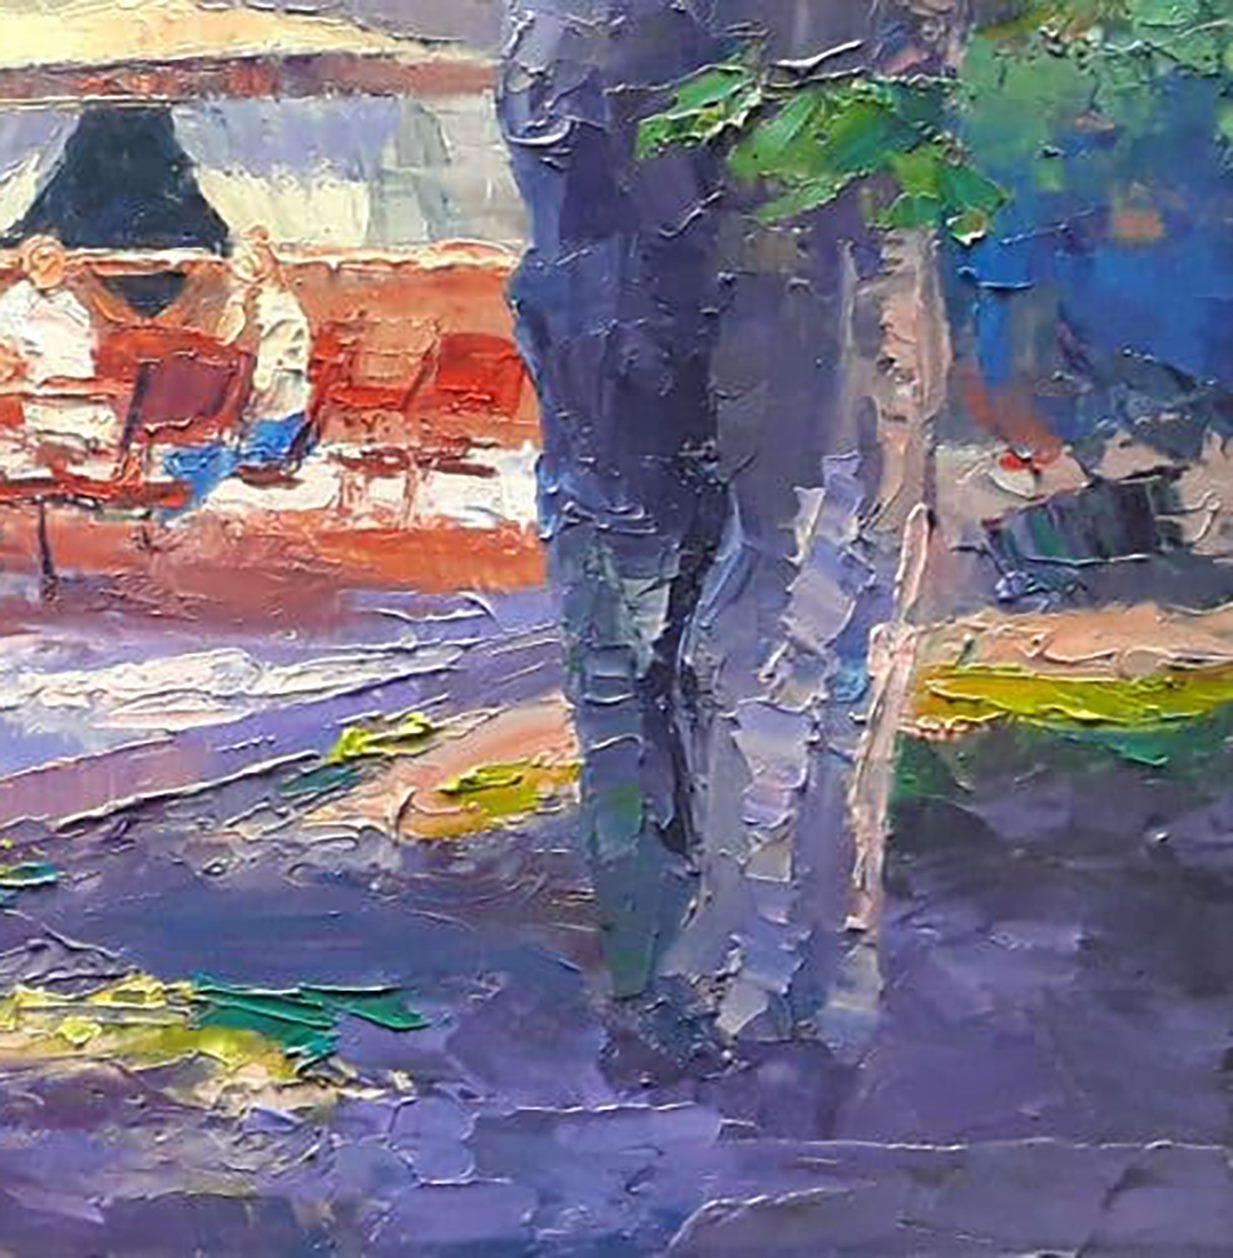 Artist: Boris Serdyuk 
Work: Original oil painting, handmade artwork, one of a kind 
Medium: Oil on Canvas
Style: Impressionism
Year: 2020
Title: Caravan Cafe
Size: 21.5